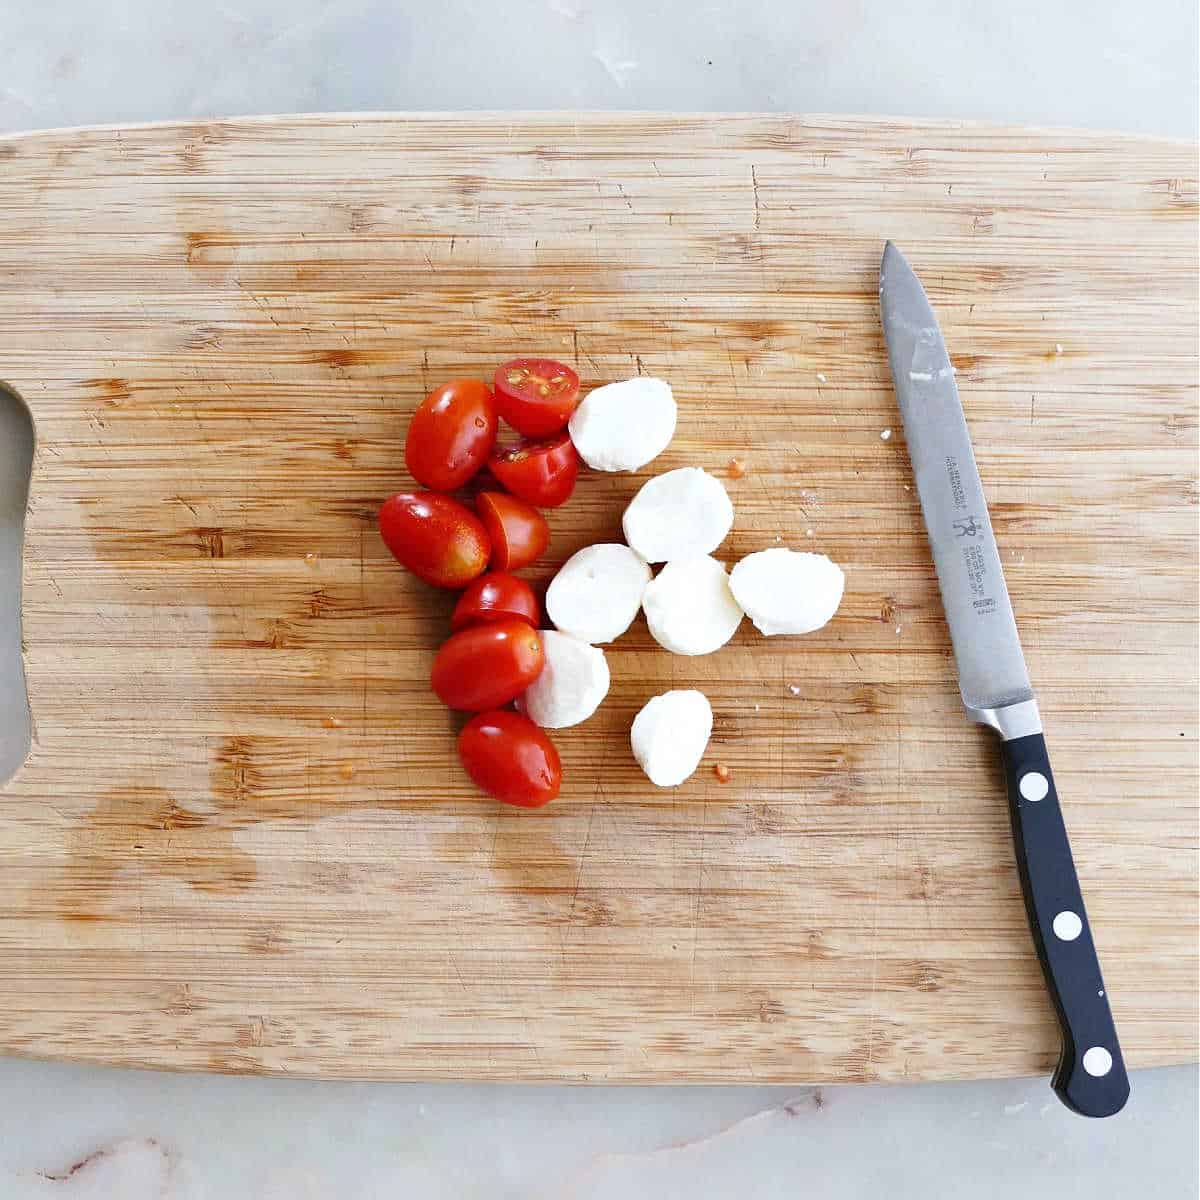 grape tomatoes and mozzarella balls sliced in half on a cutting board